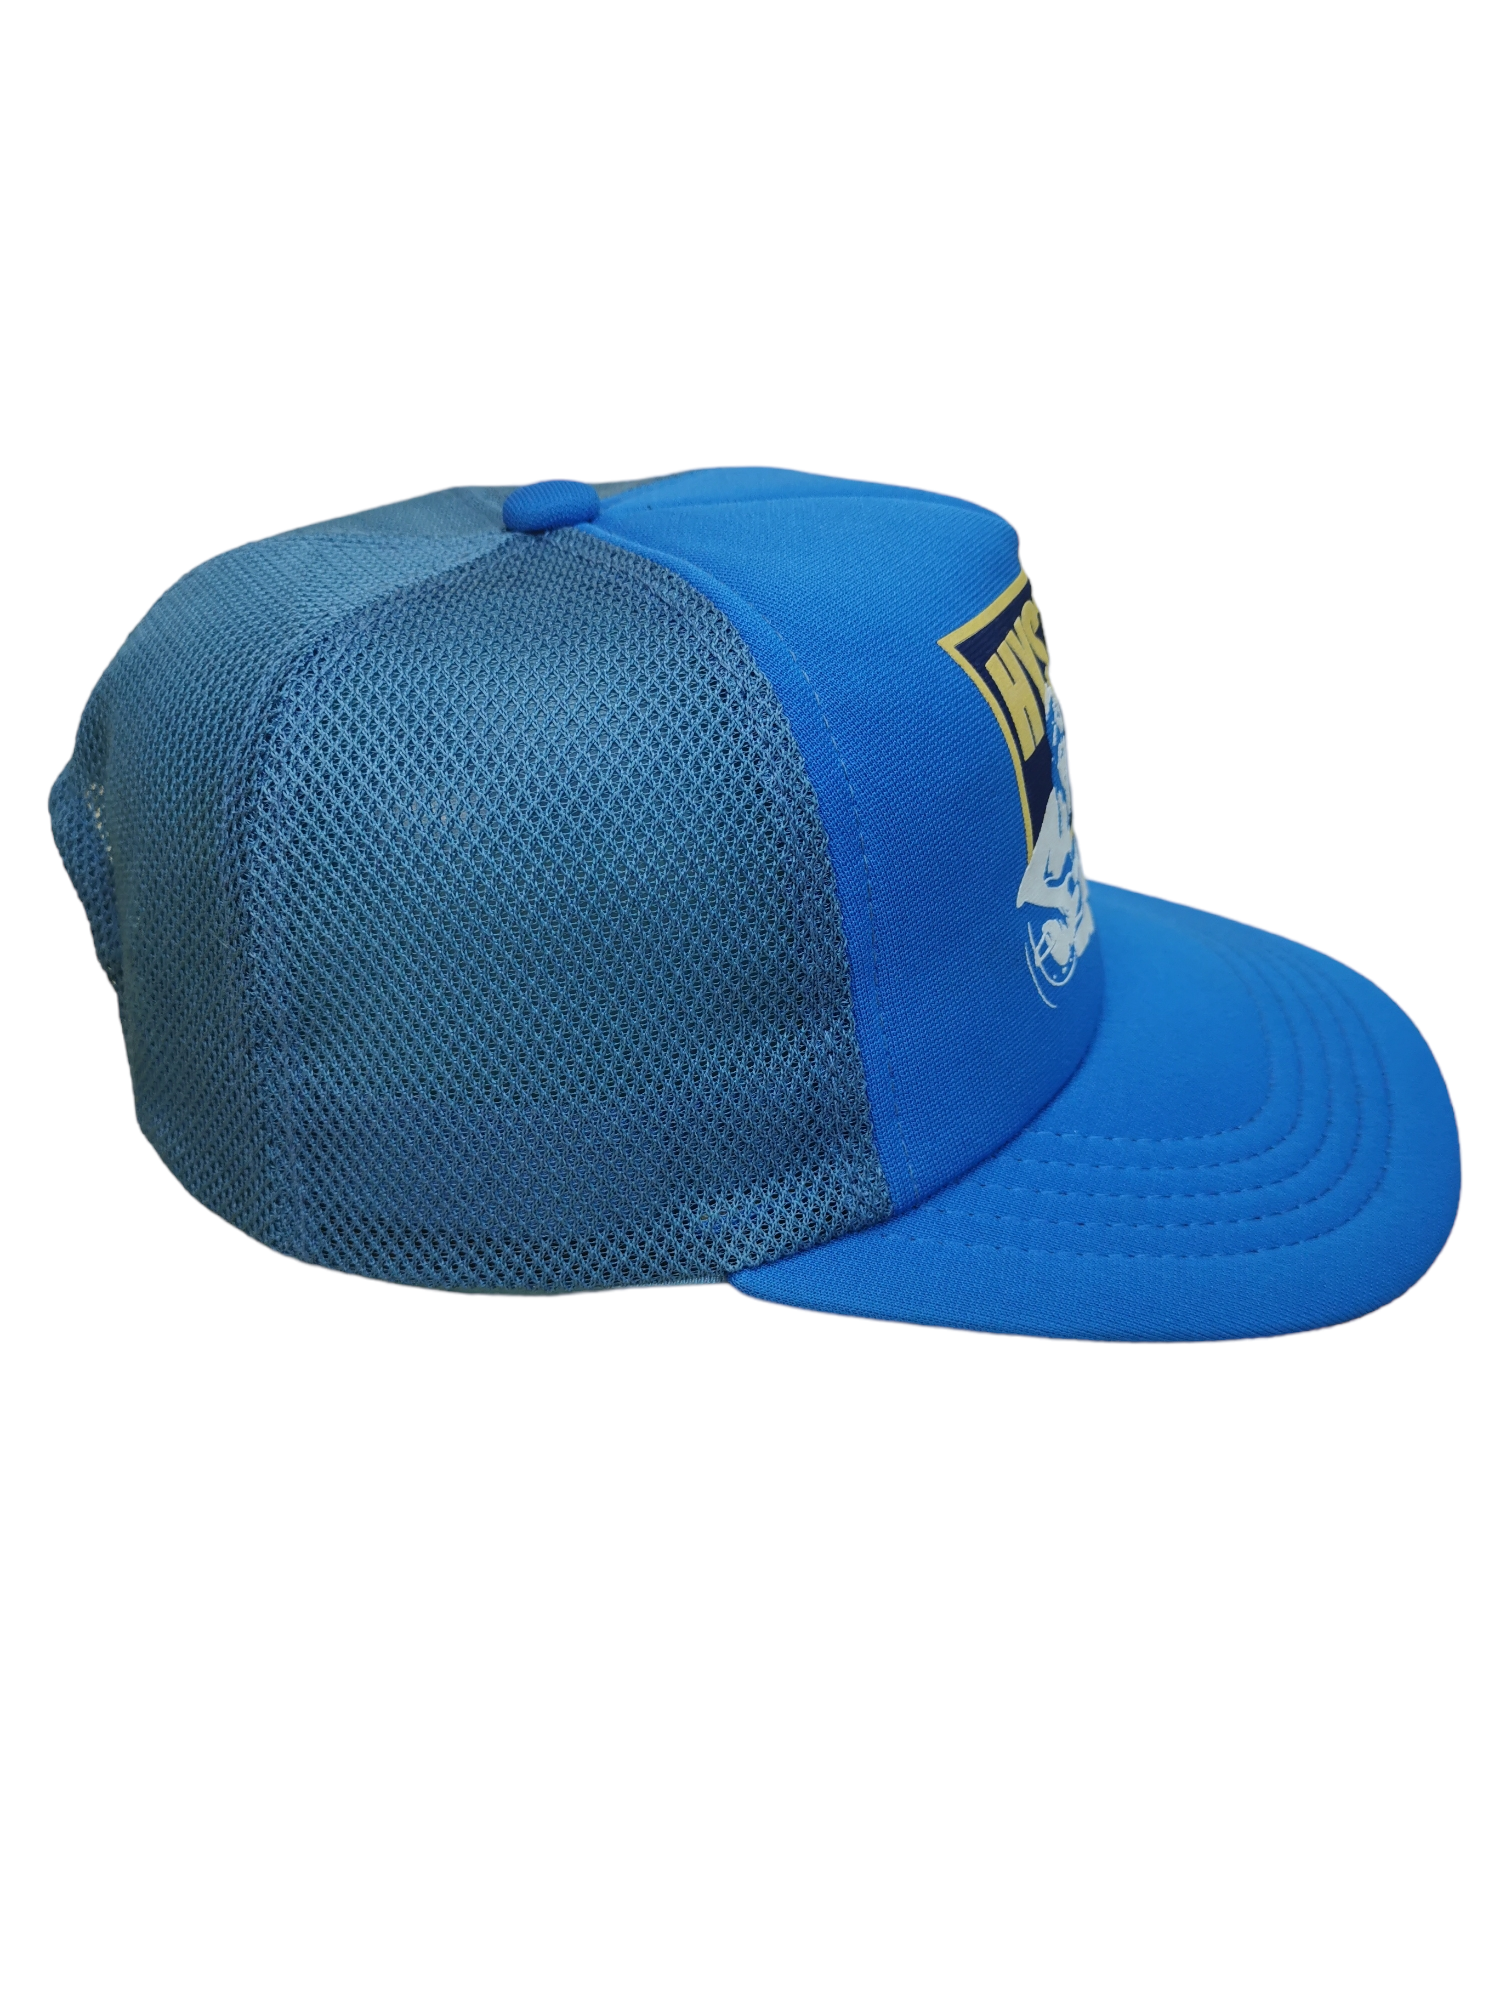 HYSTERIC GLAMOUR JAPANESE BRAND TRUCKER HAT CAP - 4